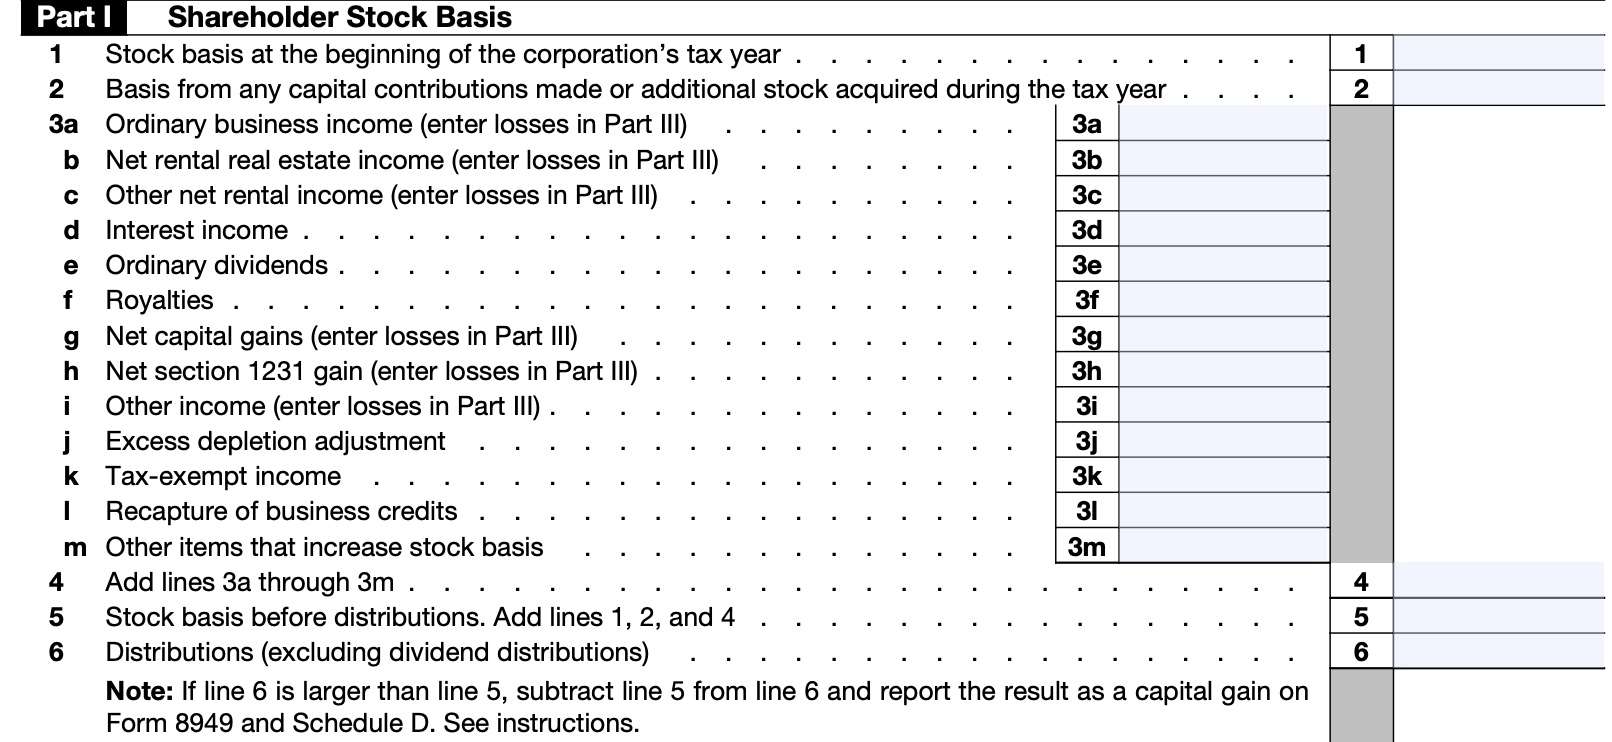 irs form 7203 part i: shareholder stock basis